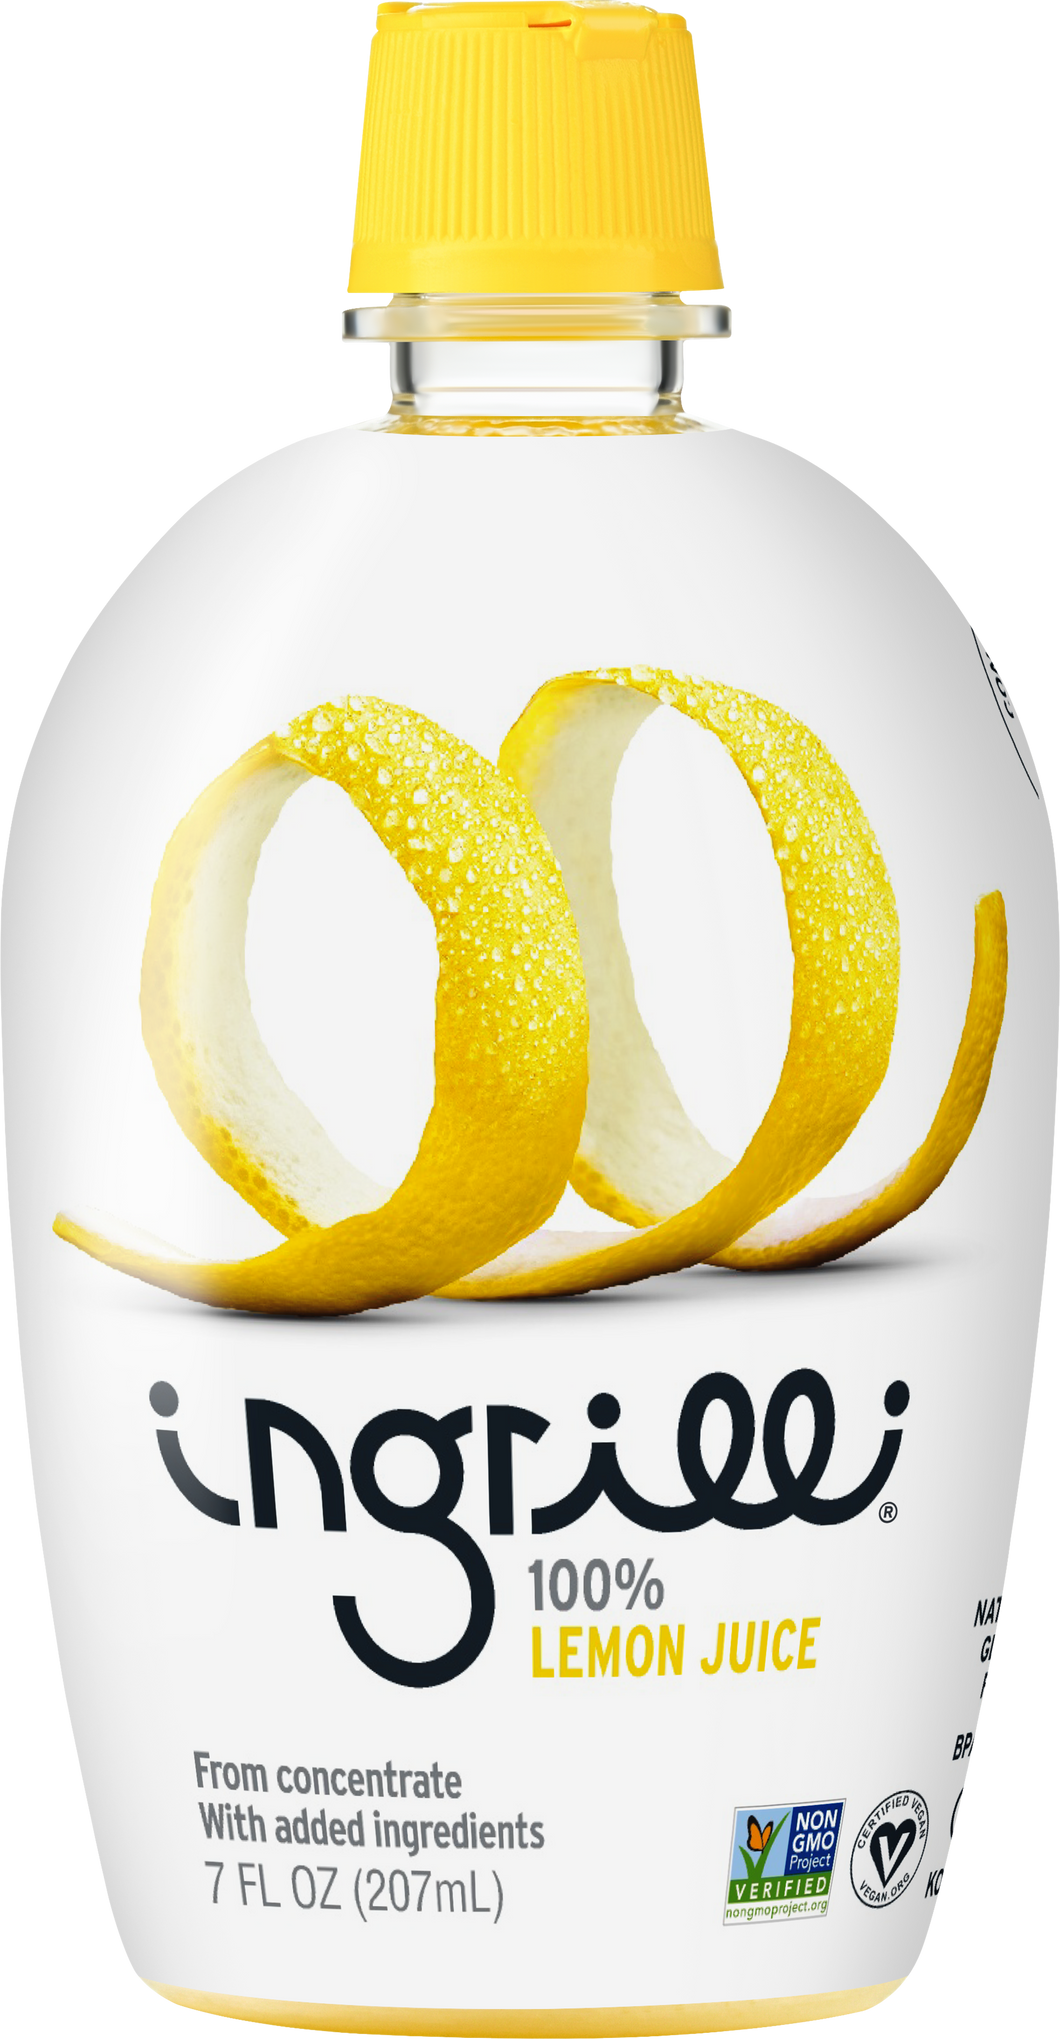 Ingrilli 100% Lemon Juice (from concentrate), 7 Fl Oz - Multi Pack